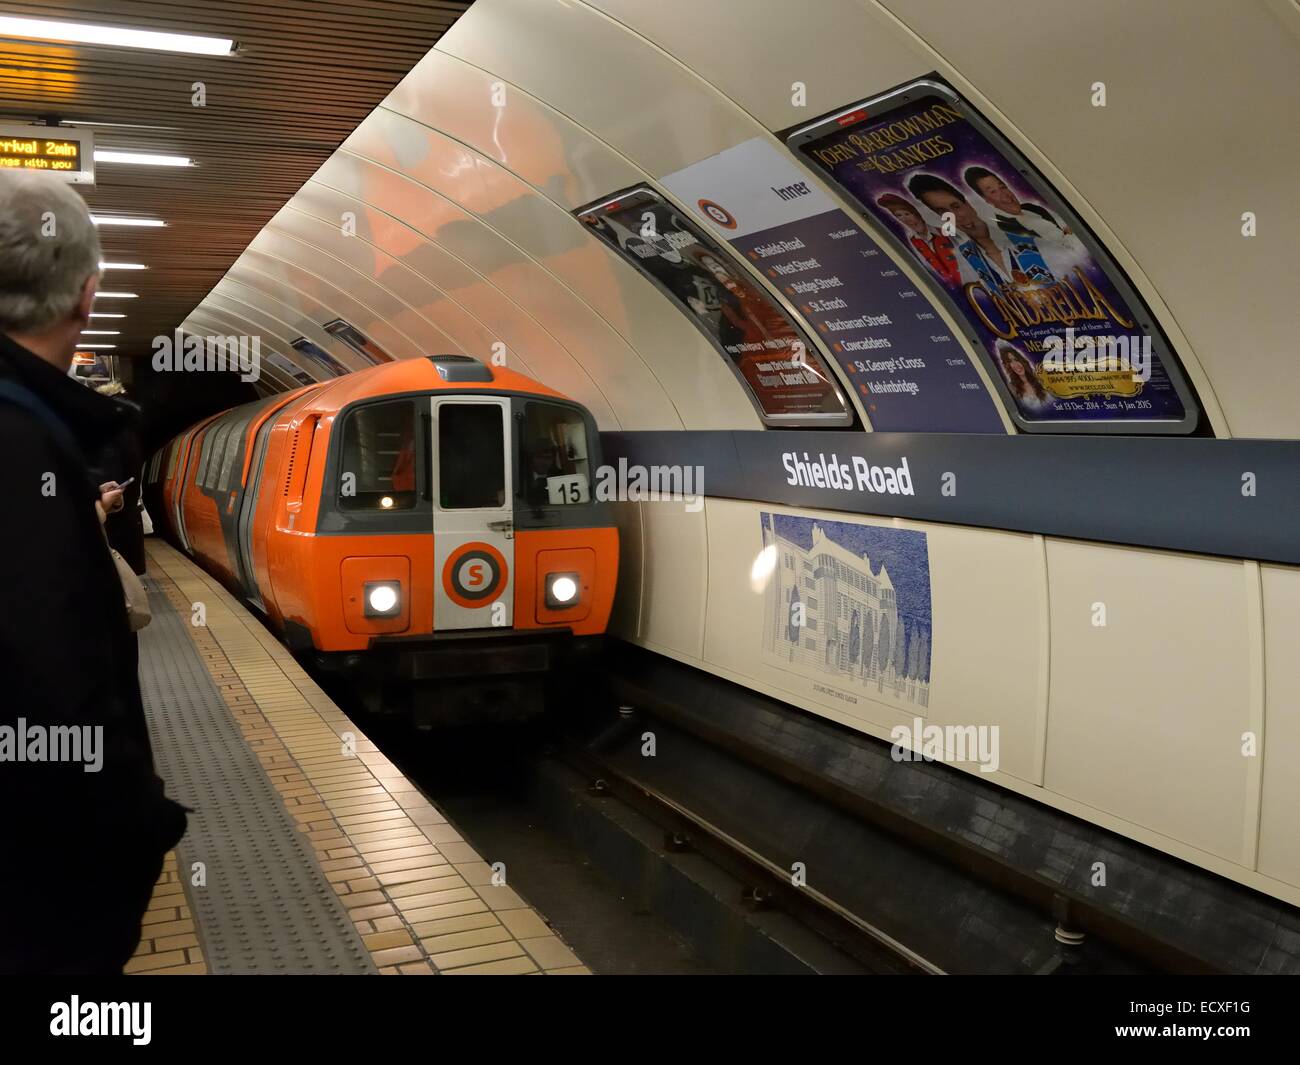 The train arriving at Shields Road underground tube station, Glasgow, Scotland. Stock Photo